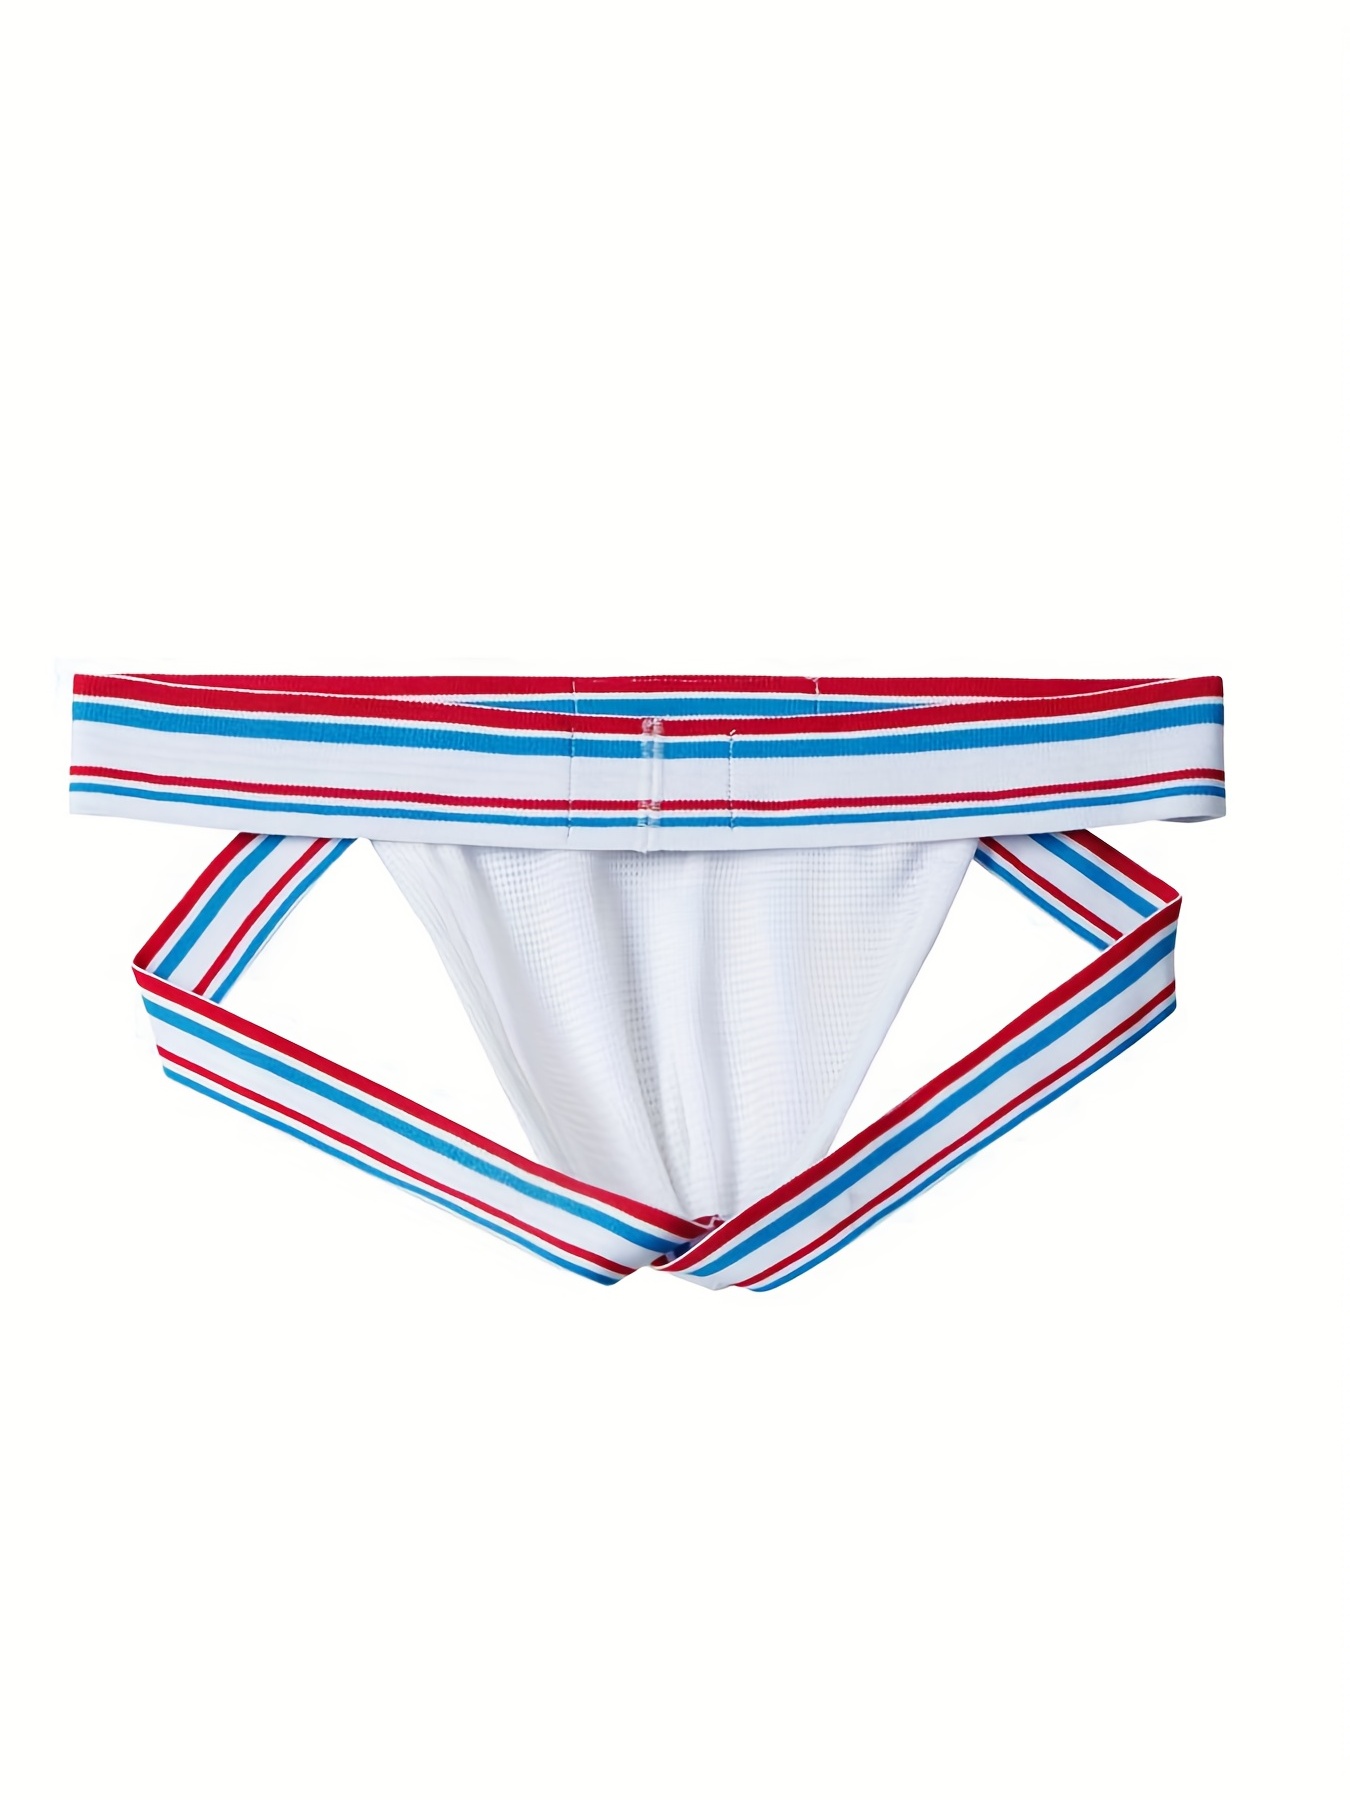 Pimfylm Cotton Underwear For Men Men's Jockstrap Underwear Breathable Mesh  Supporter Cotton Pouch Jock Briefs White Small 